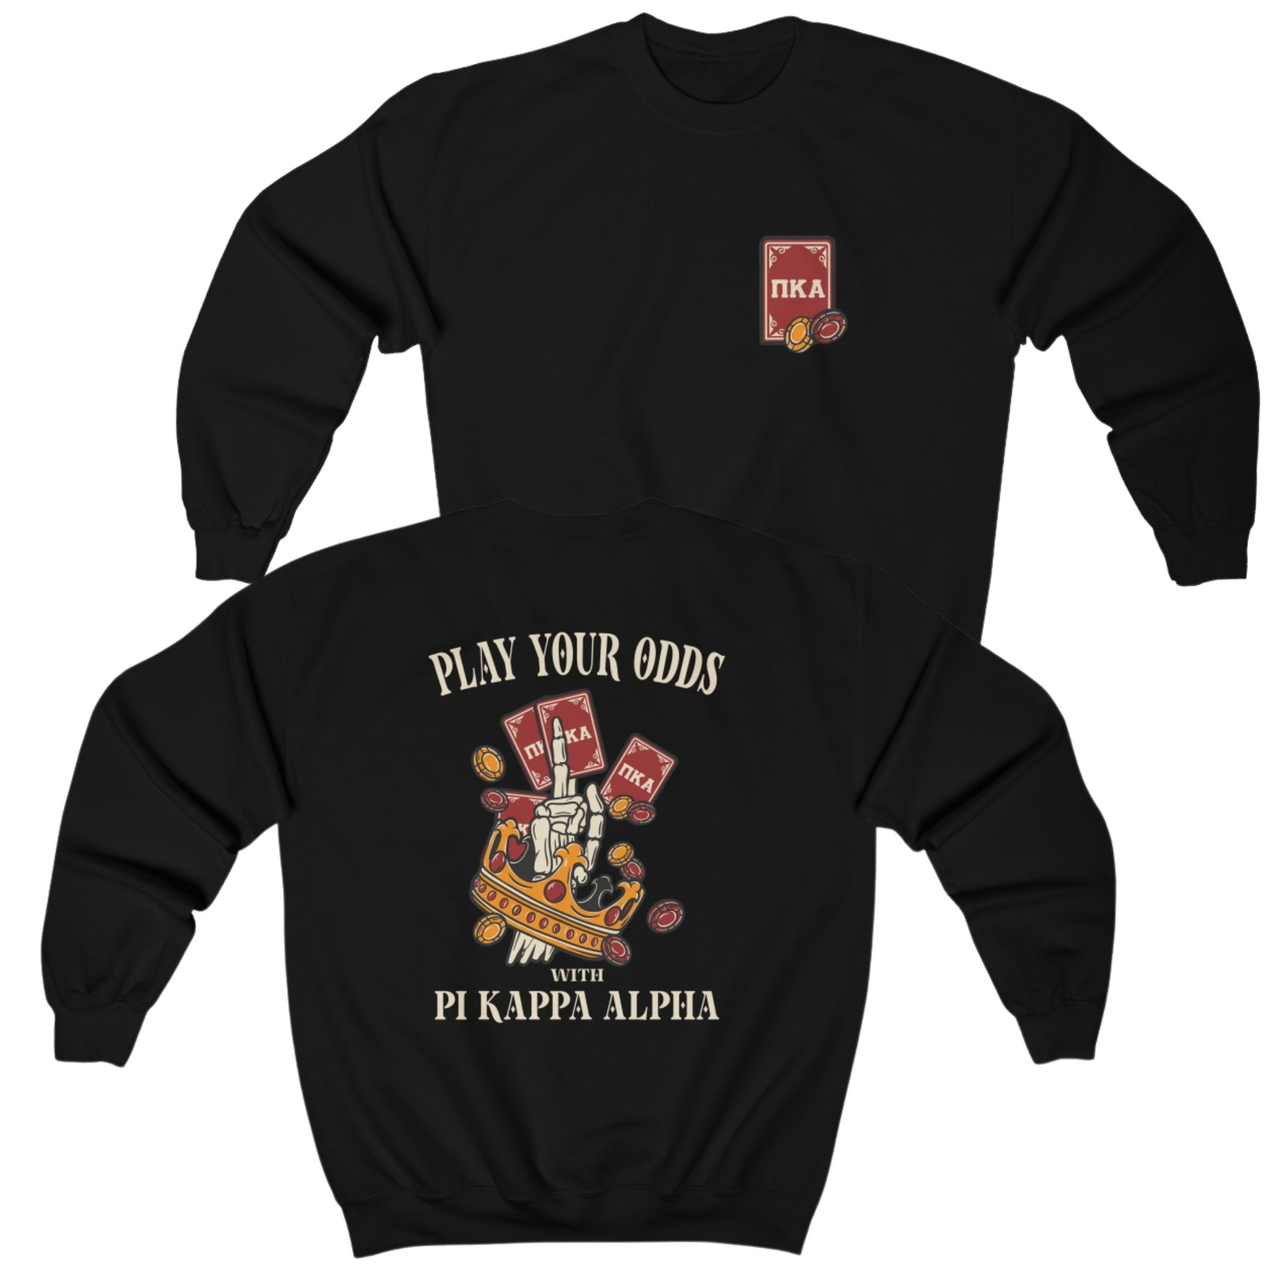 Black Pi Kappa Alpha Graphic Crewneck Sweatshirt | Play Your Odds | Pi kappa alpha fraternity shirt 